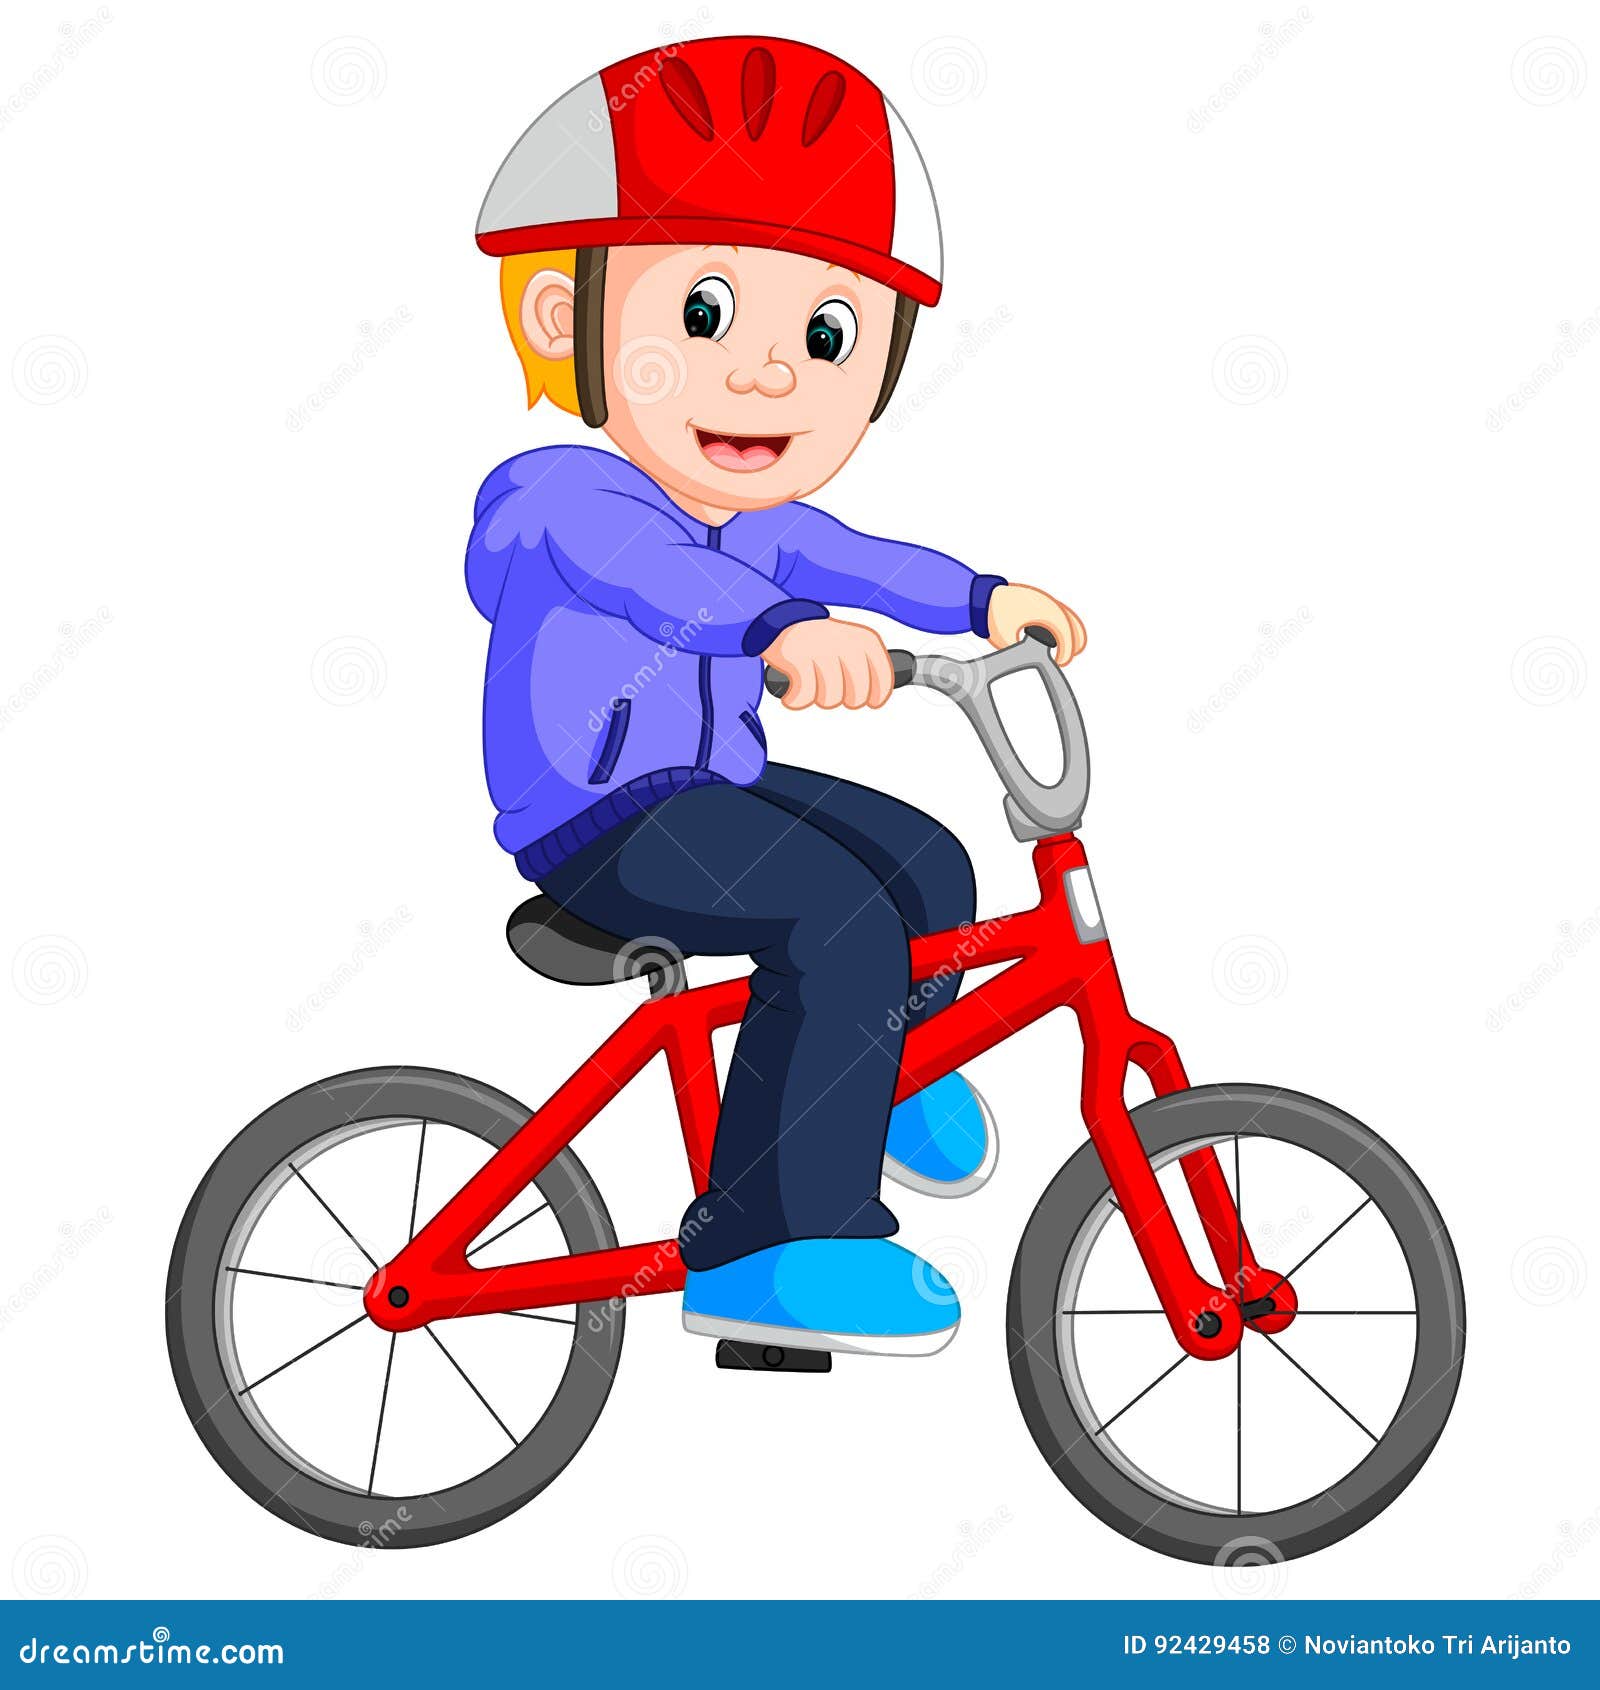 Boy cycling cartoon stock vector. Illustration of rider - 92429458